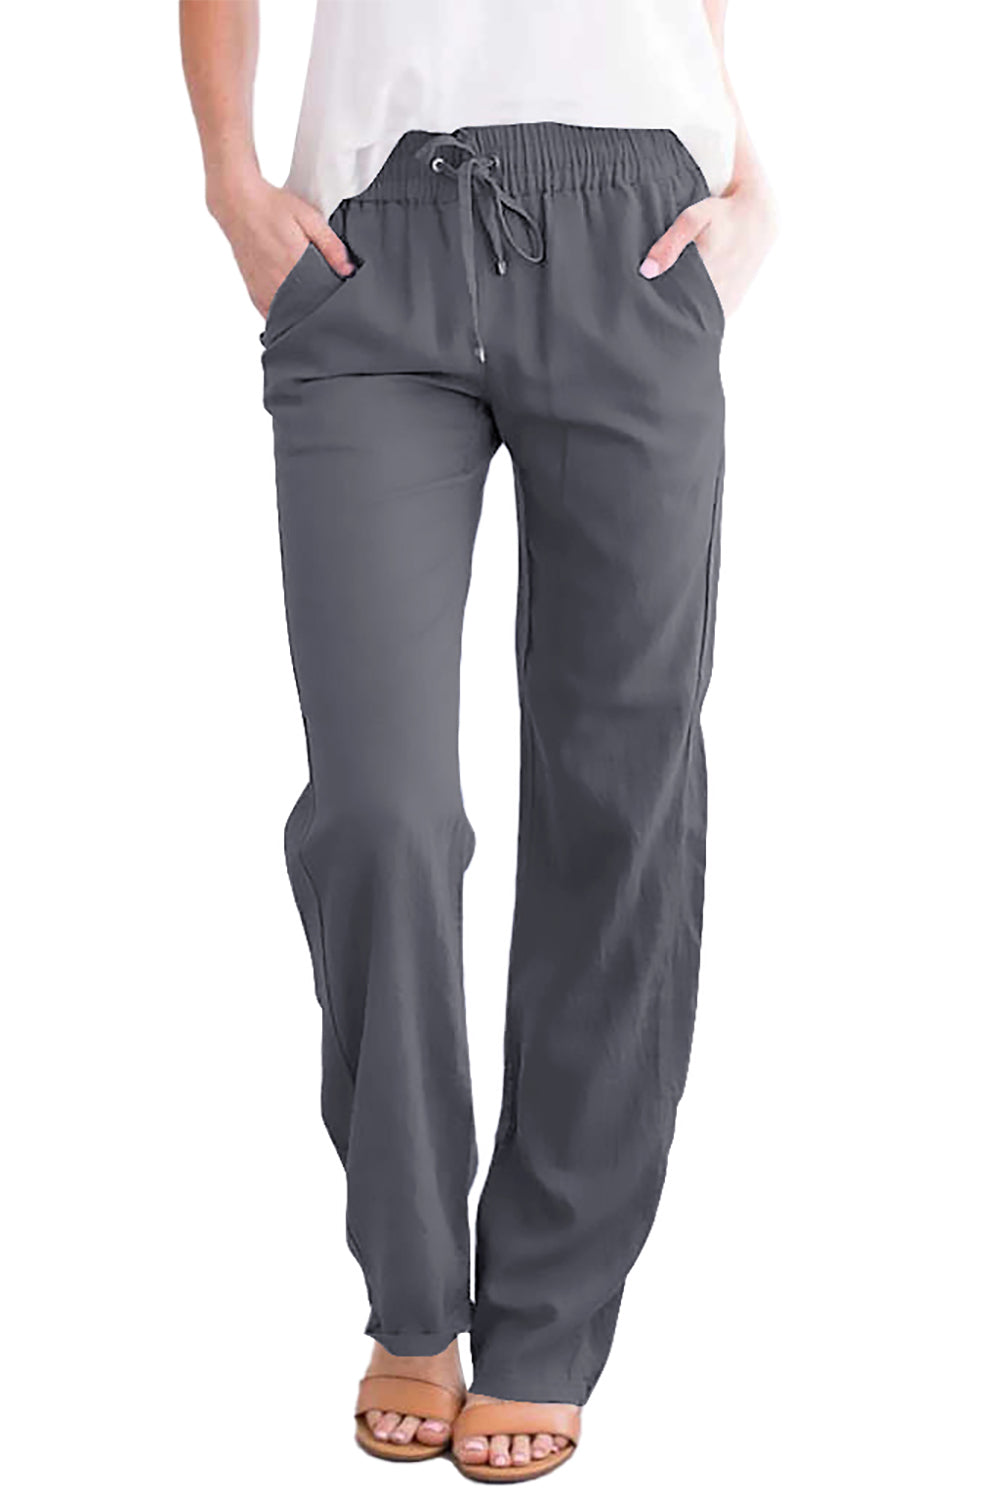 Gray Drawstring Elastic Waist Pockets Long Straight Legs Pants